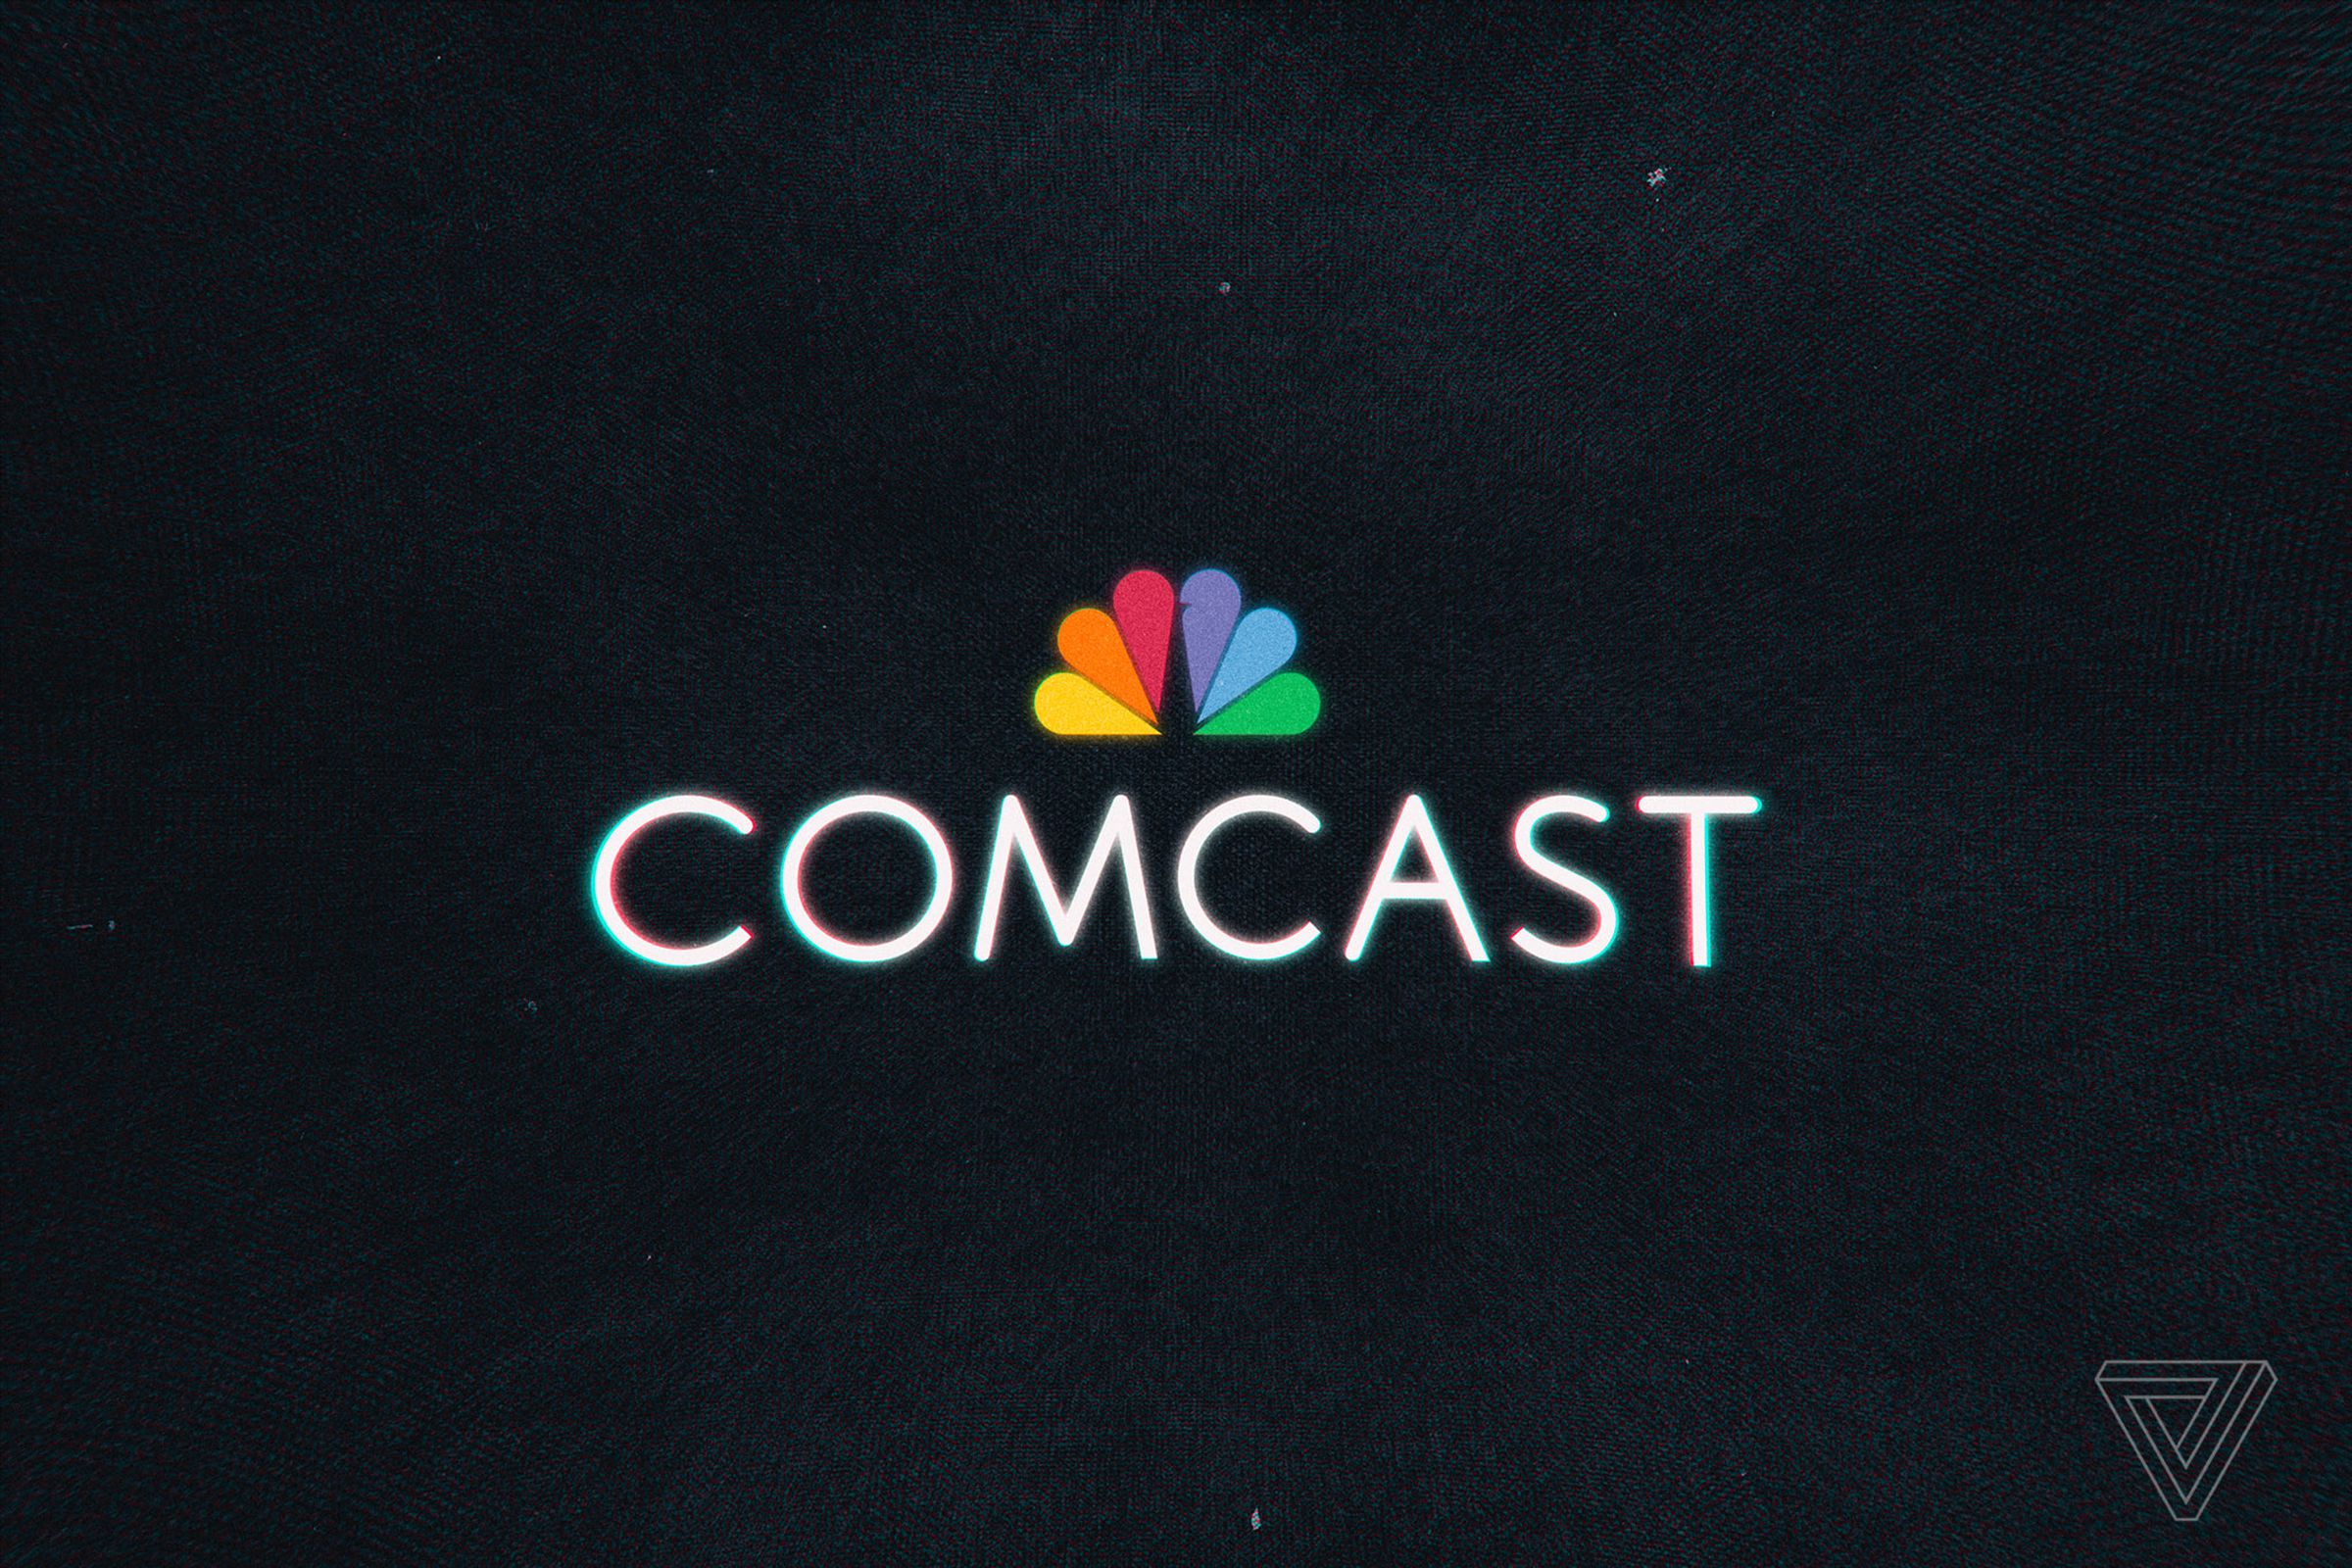 The Comcast logo on a black background.